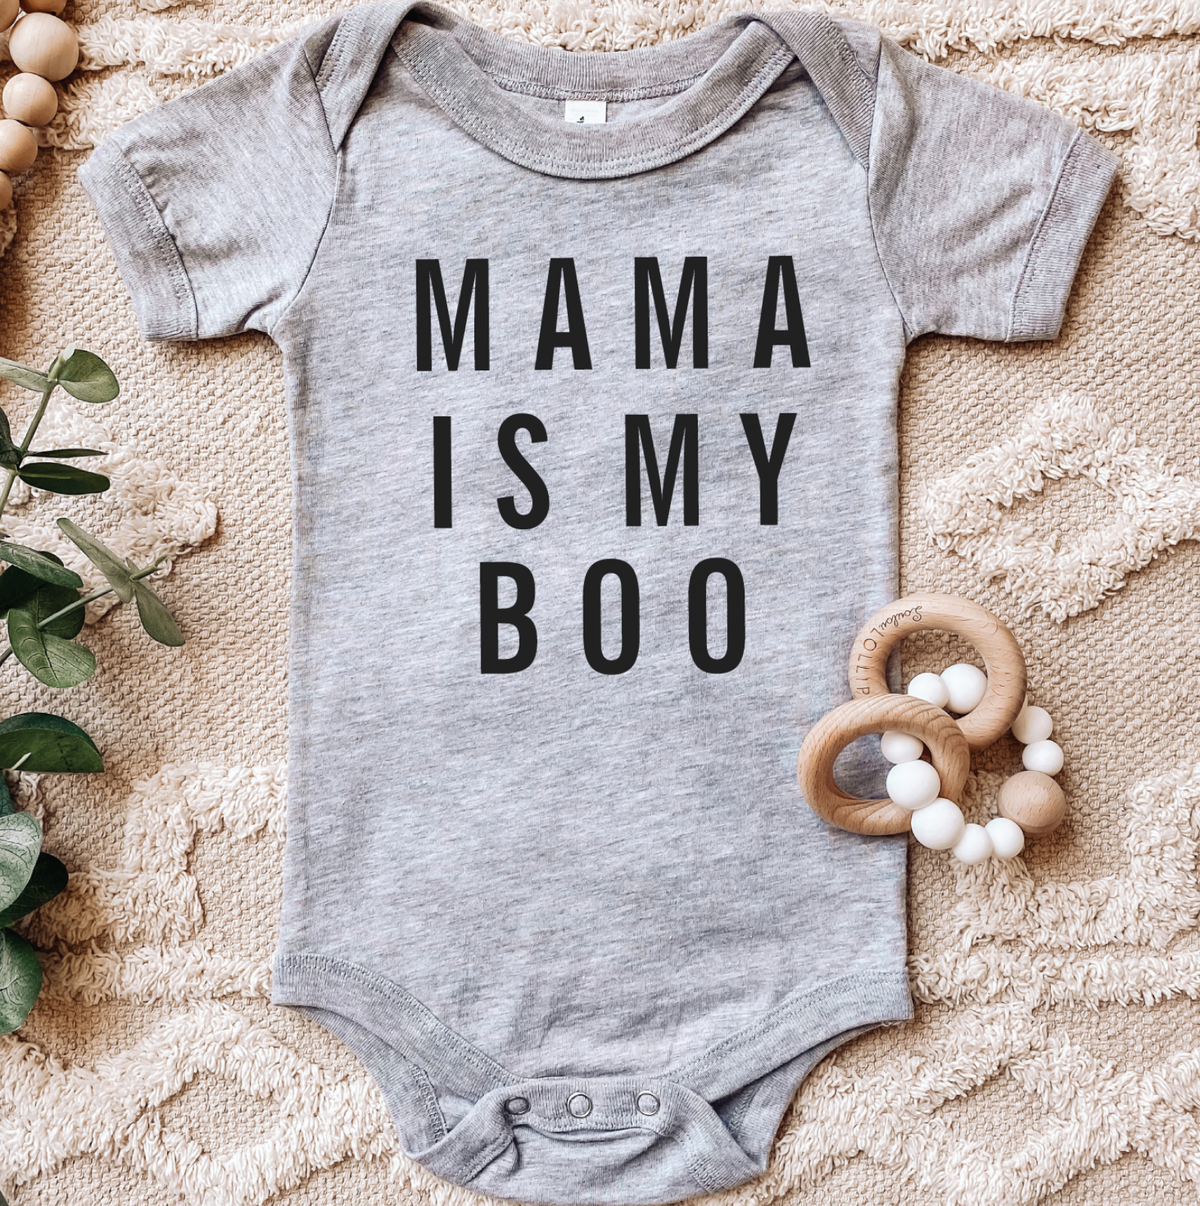 Mama is my boo baby onesie